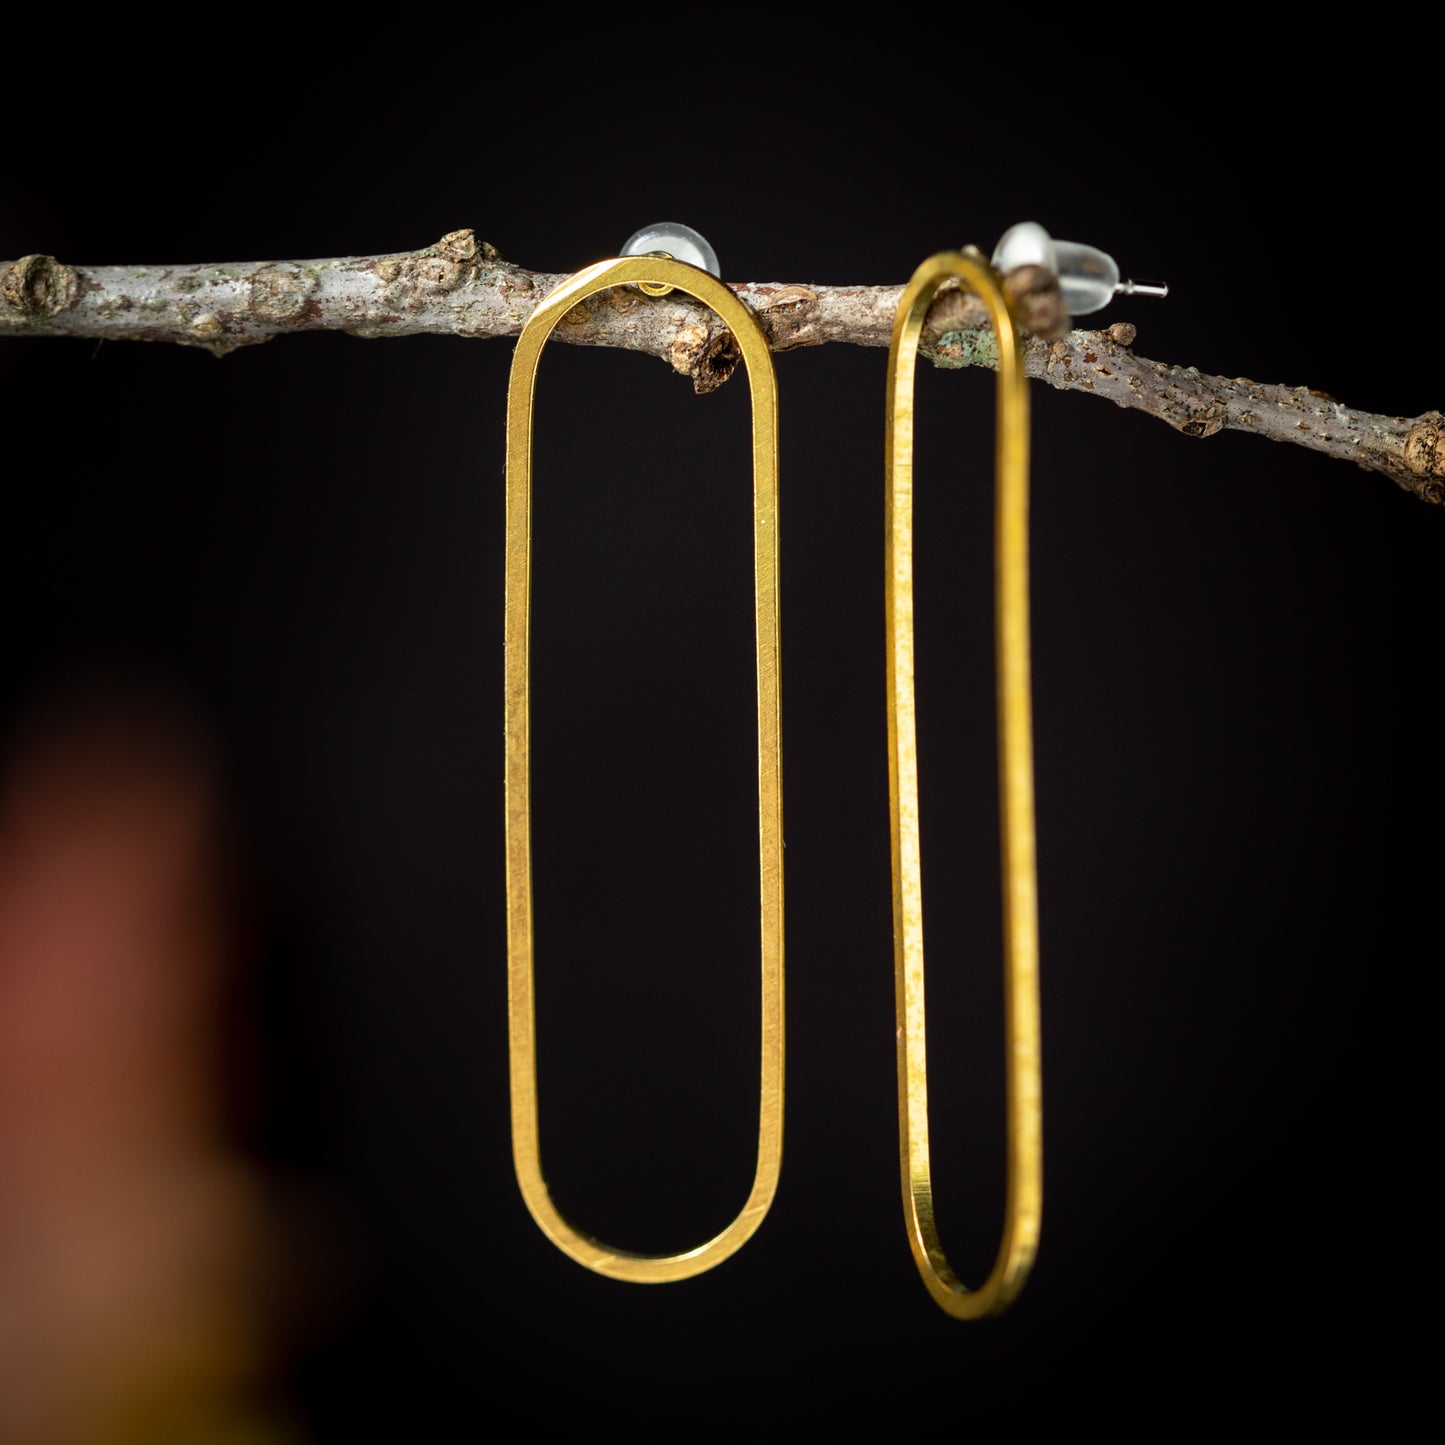 Elongated Oval Gold Post Earrings